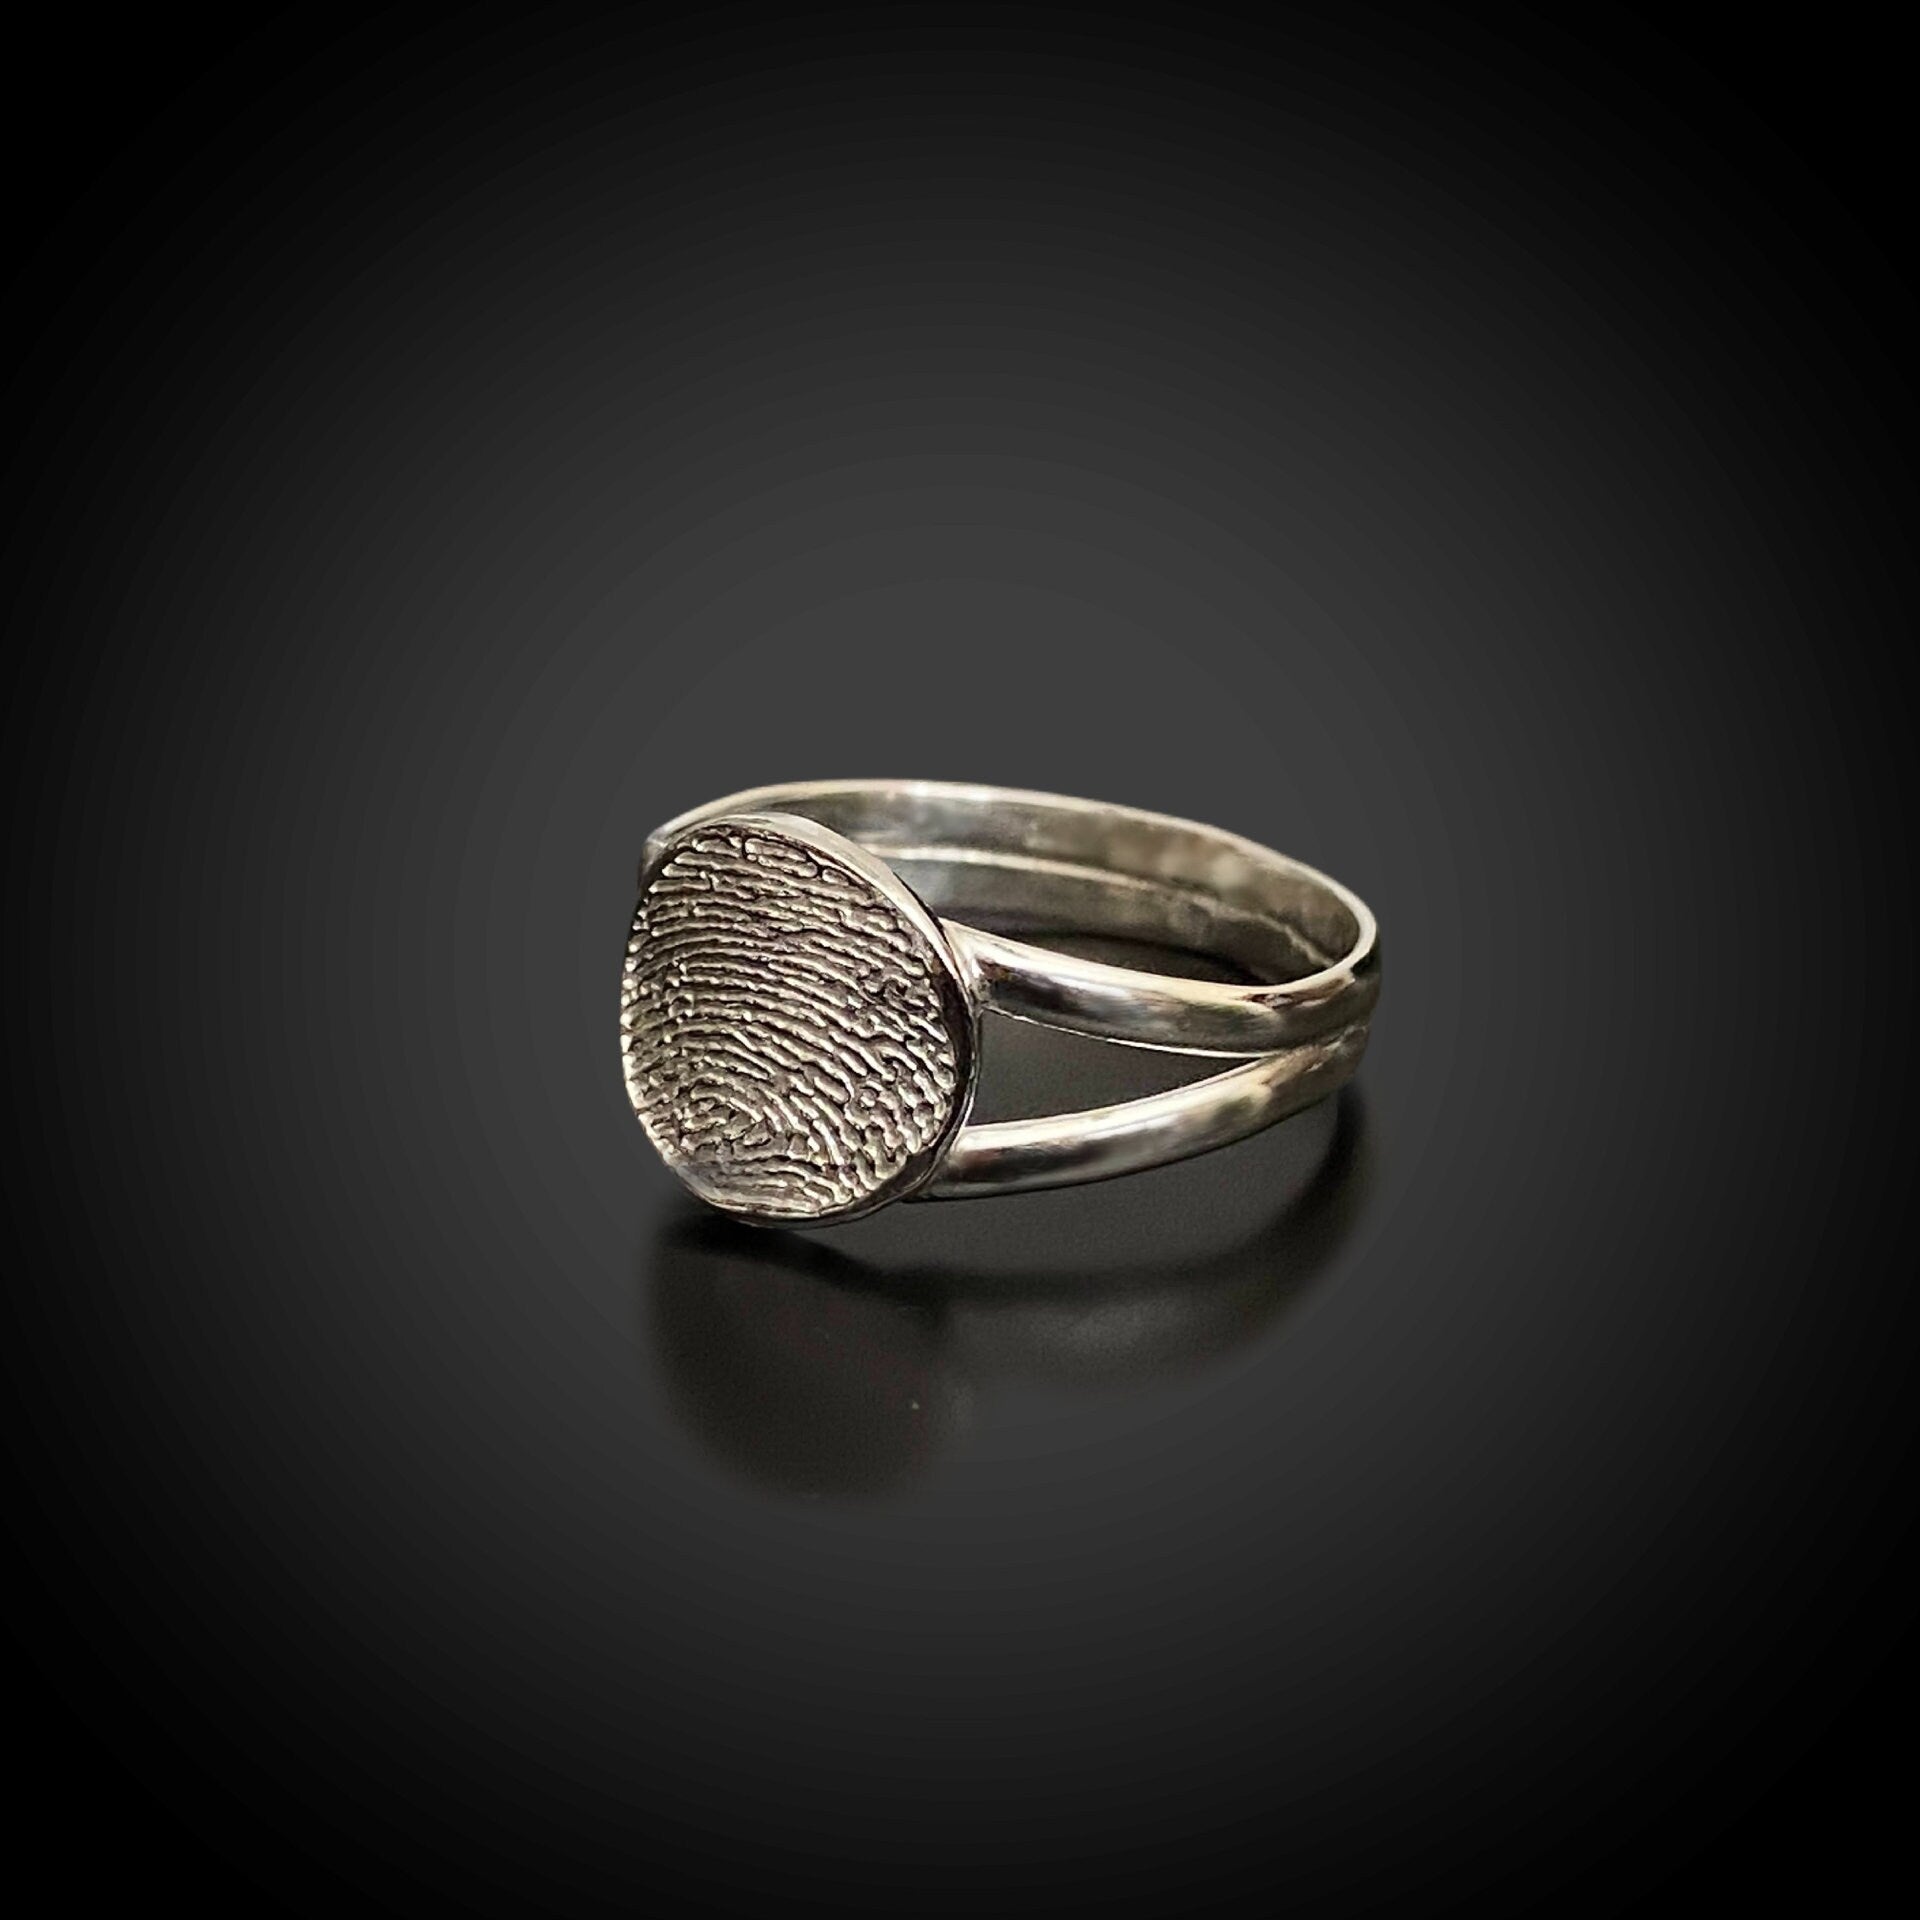 An Open Side Sterling Silver Fingerprint Ring